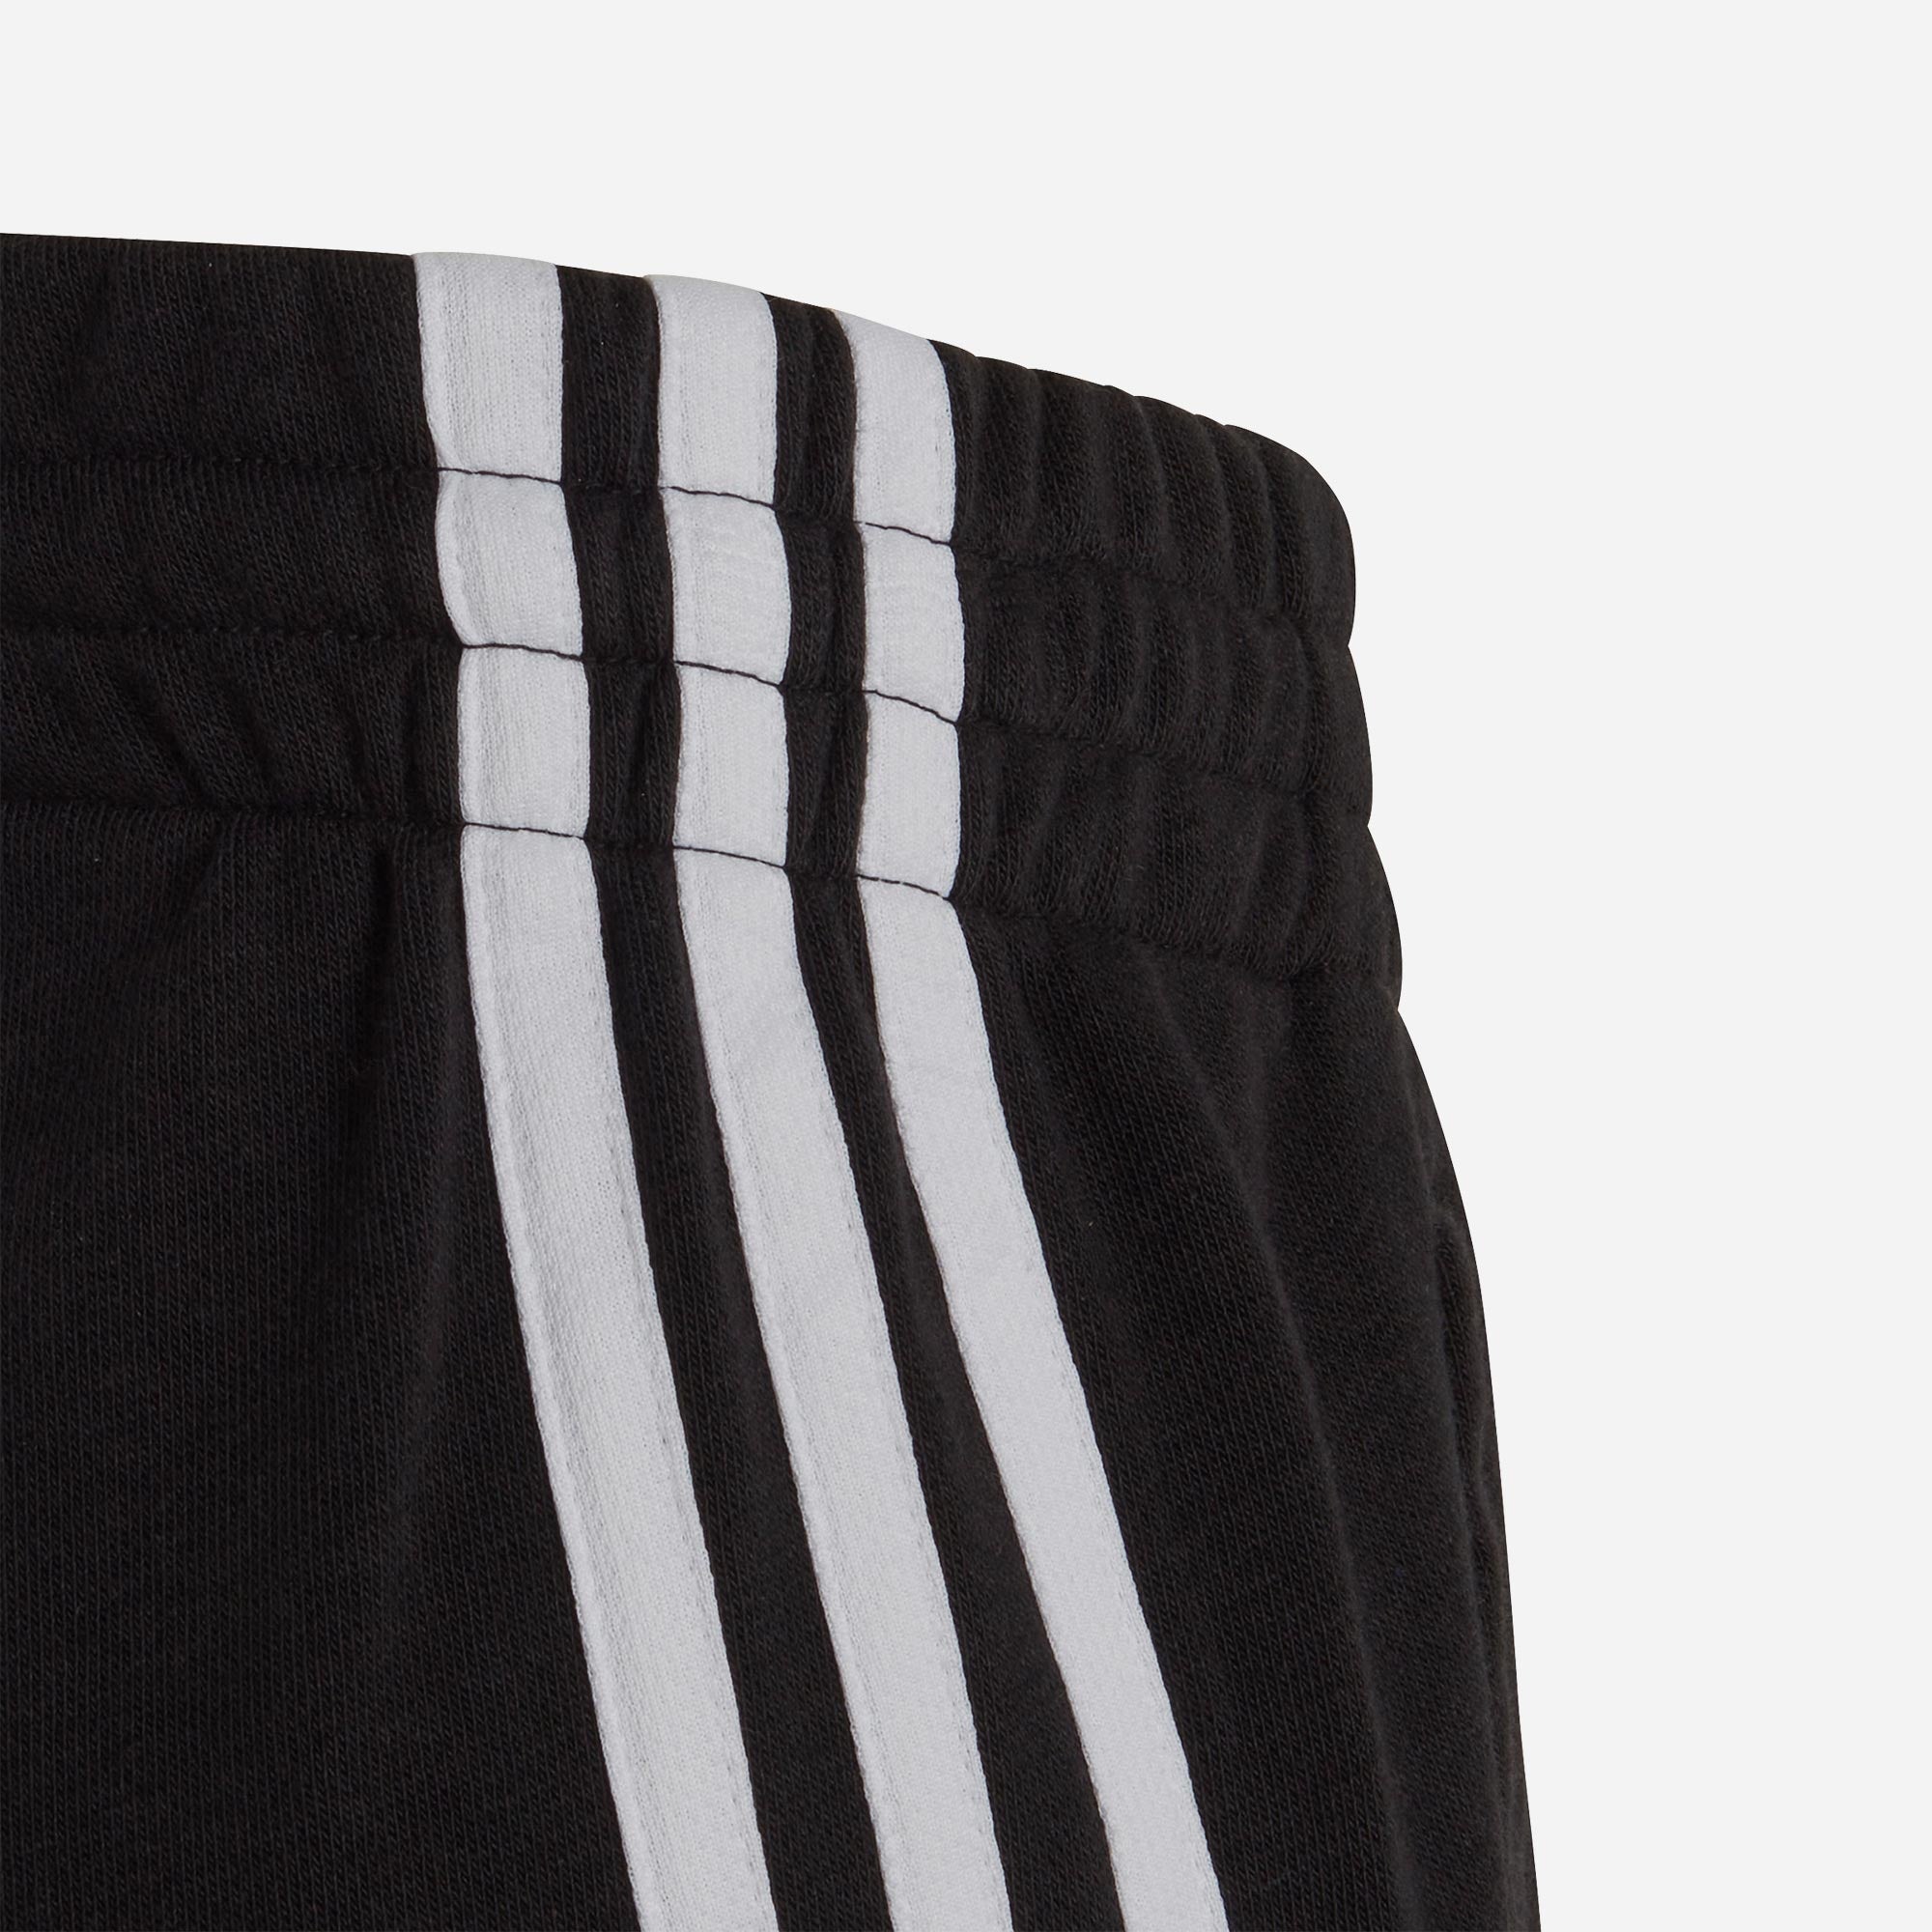 Adidas Youth Designator Track Pants, Black / Lime Green - Walmart.com